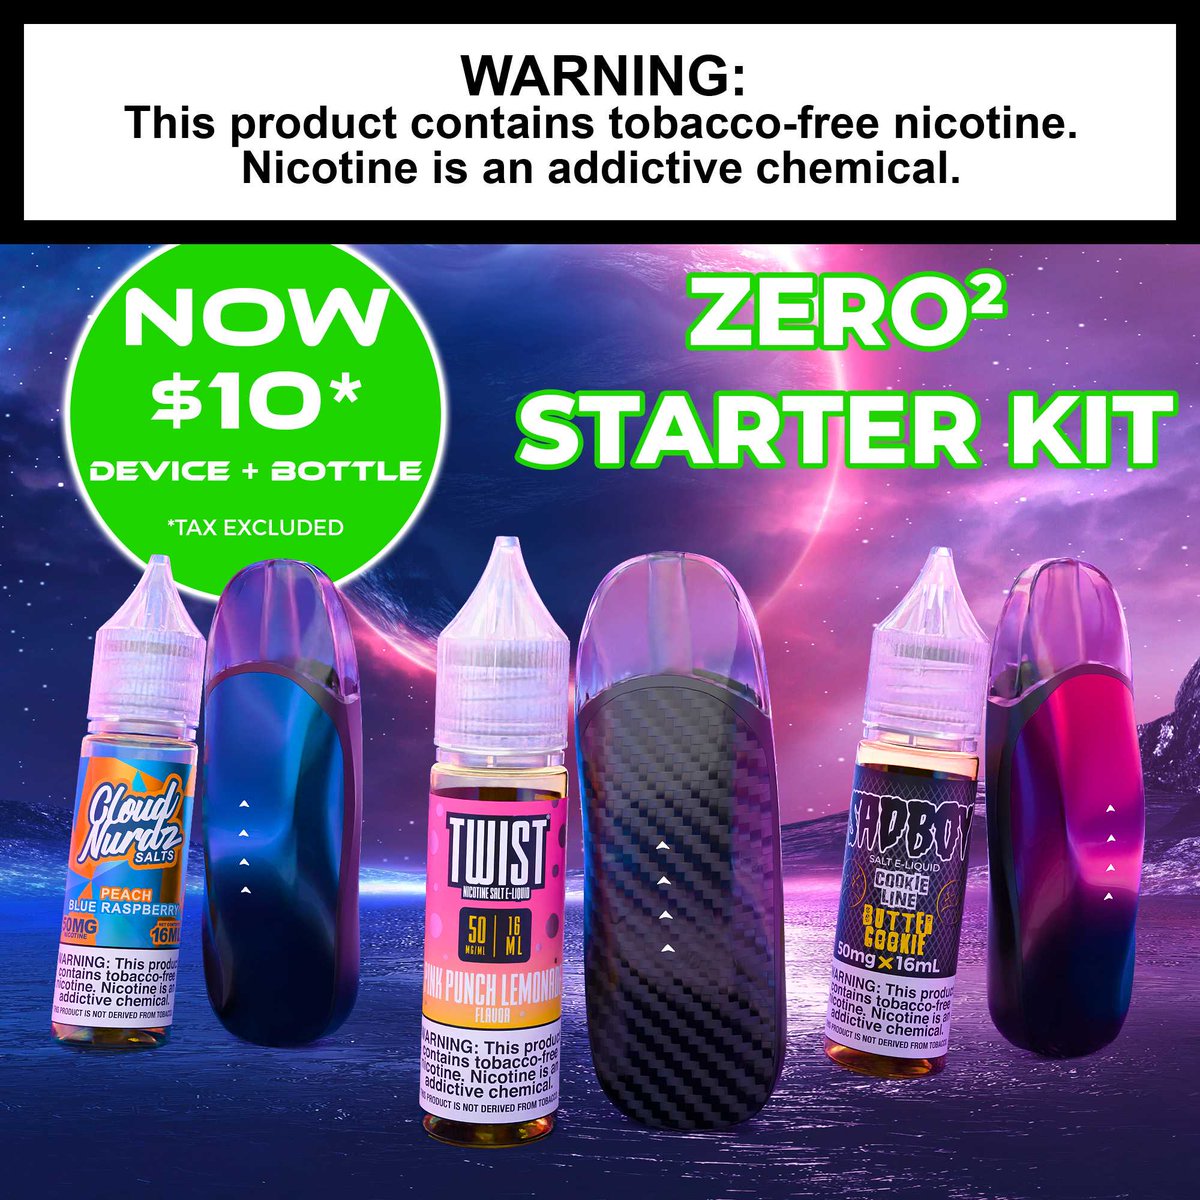 Zero2 Starter Kit... New Price! Shop Today!
.
.
.
#MidwestGoods #MWGS #Eliquid #Vapelife #vapstagram #vapesociety #vaping #wholesalevapejuice #zero2starterkit #daddysvape